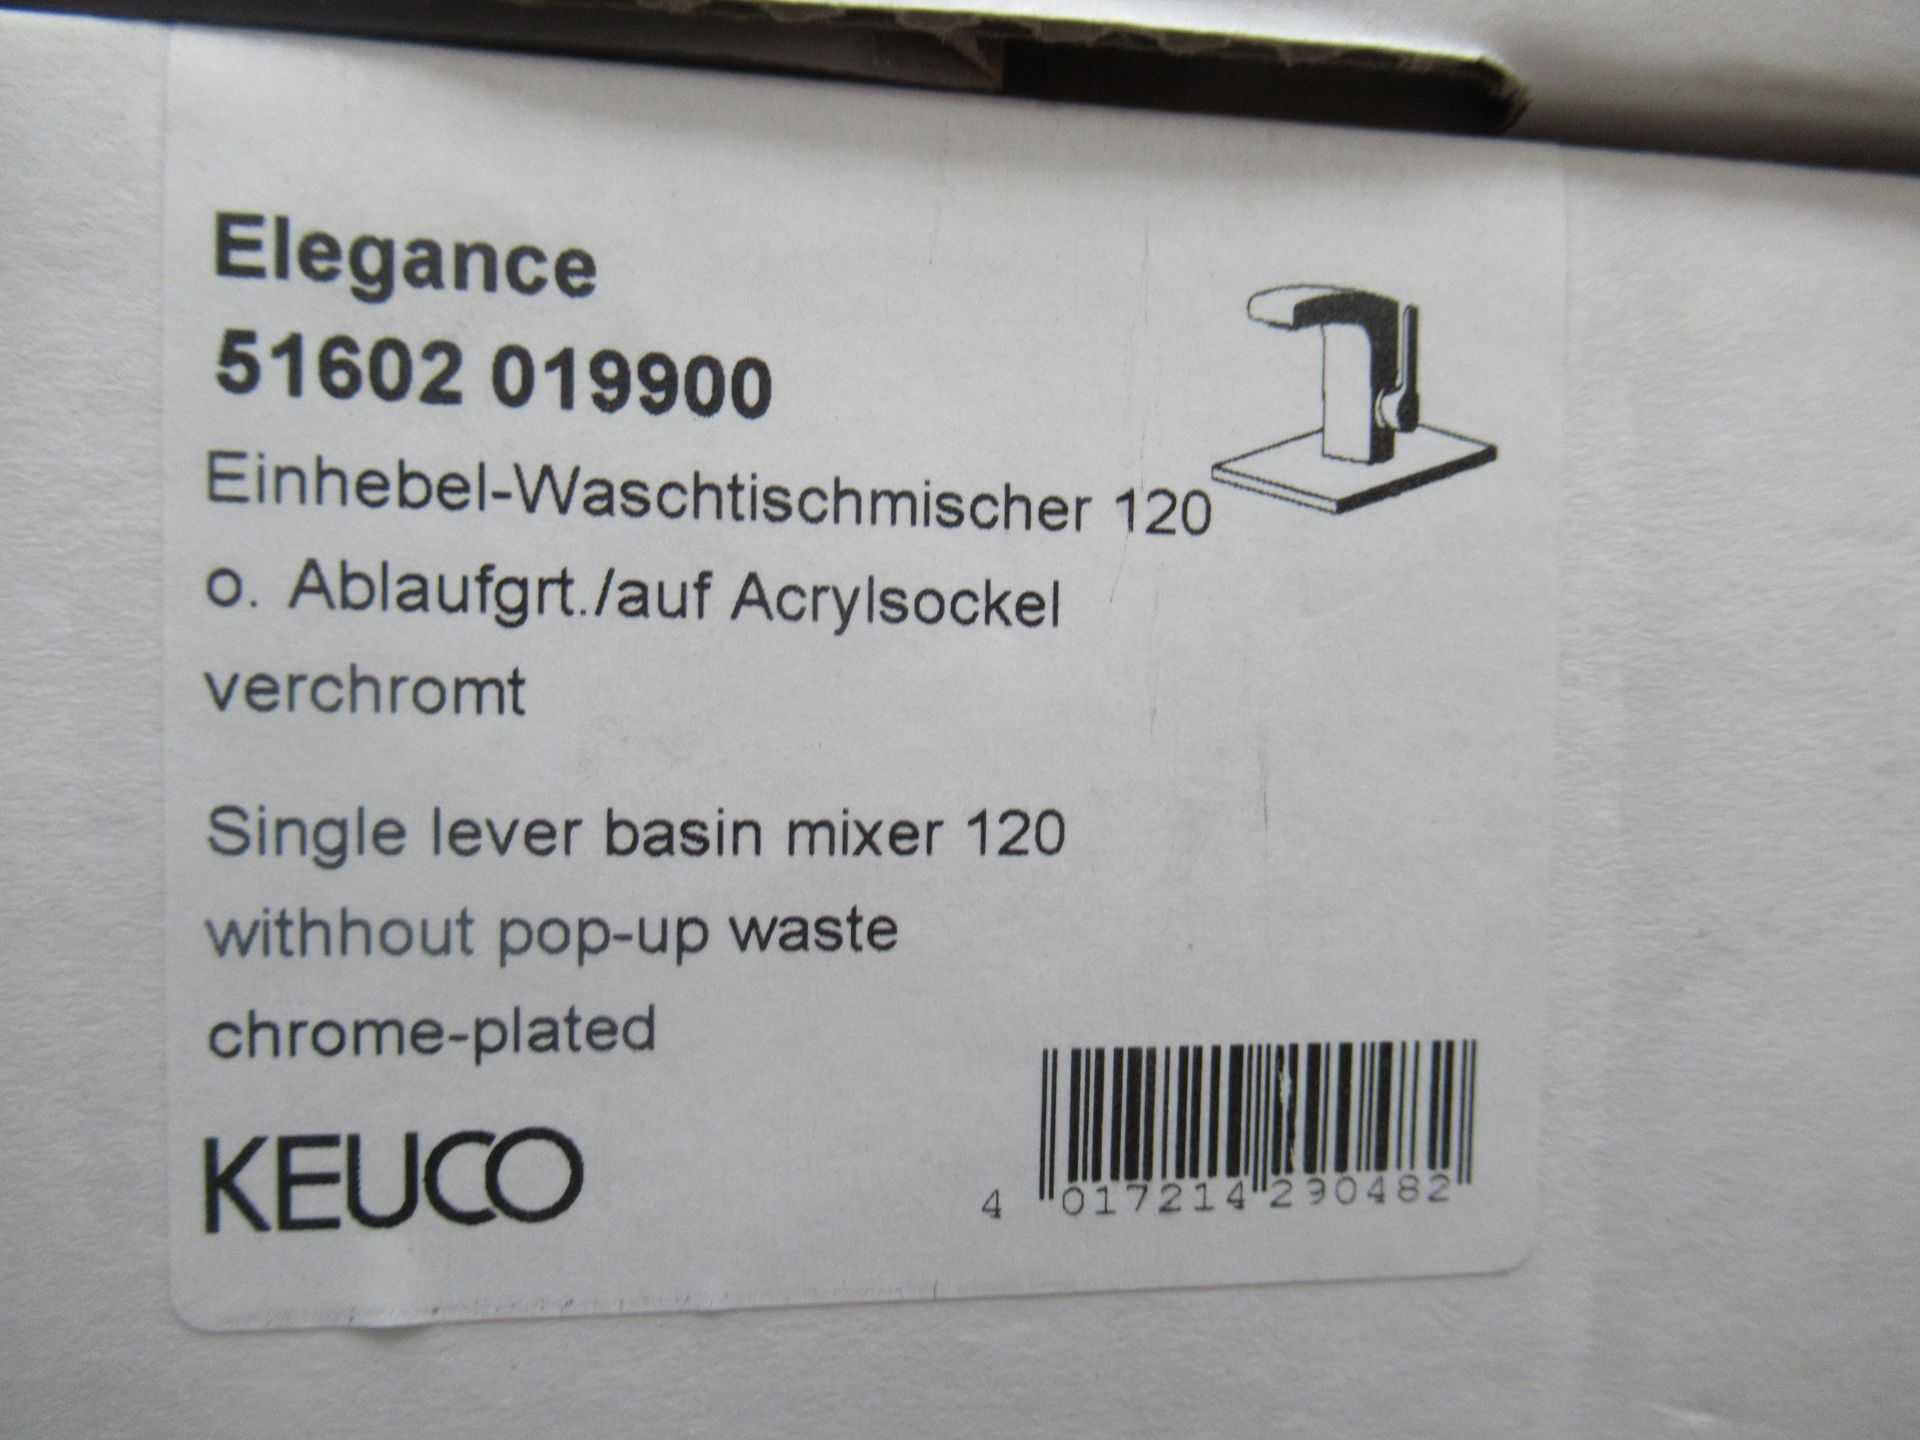 2 x Keuco Elegance Single Lever Basin Mixer 120-Tap, Chrome Plated, P/N 51602-019900 - Image 2 of 3